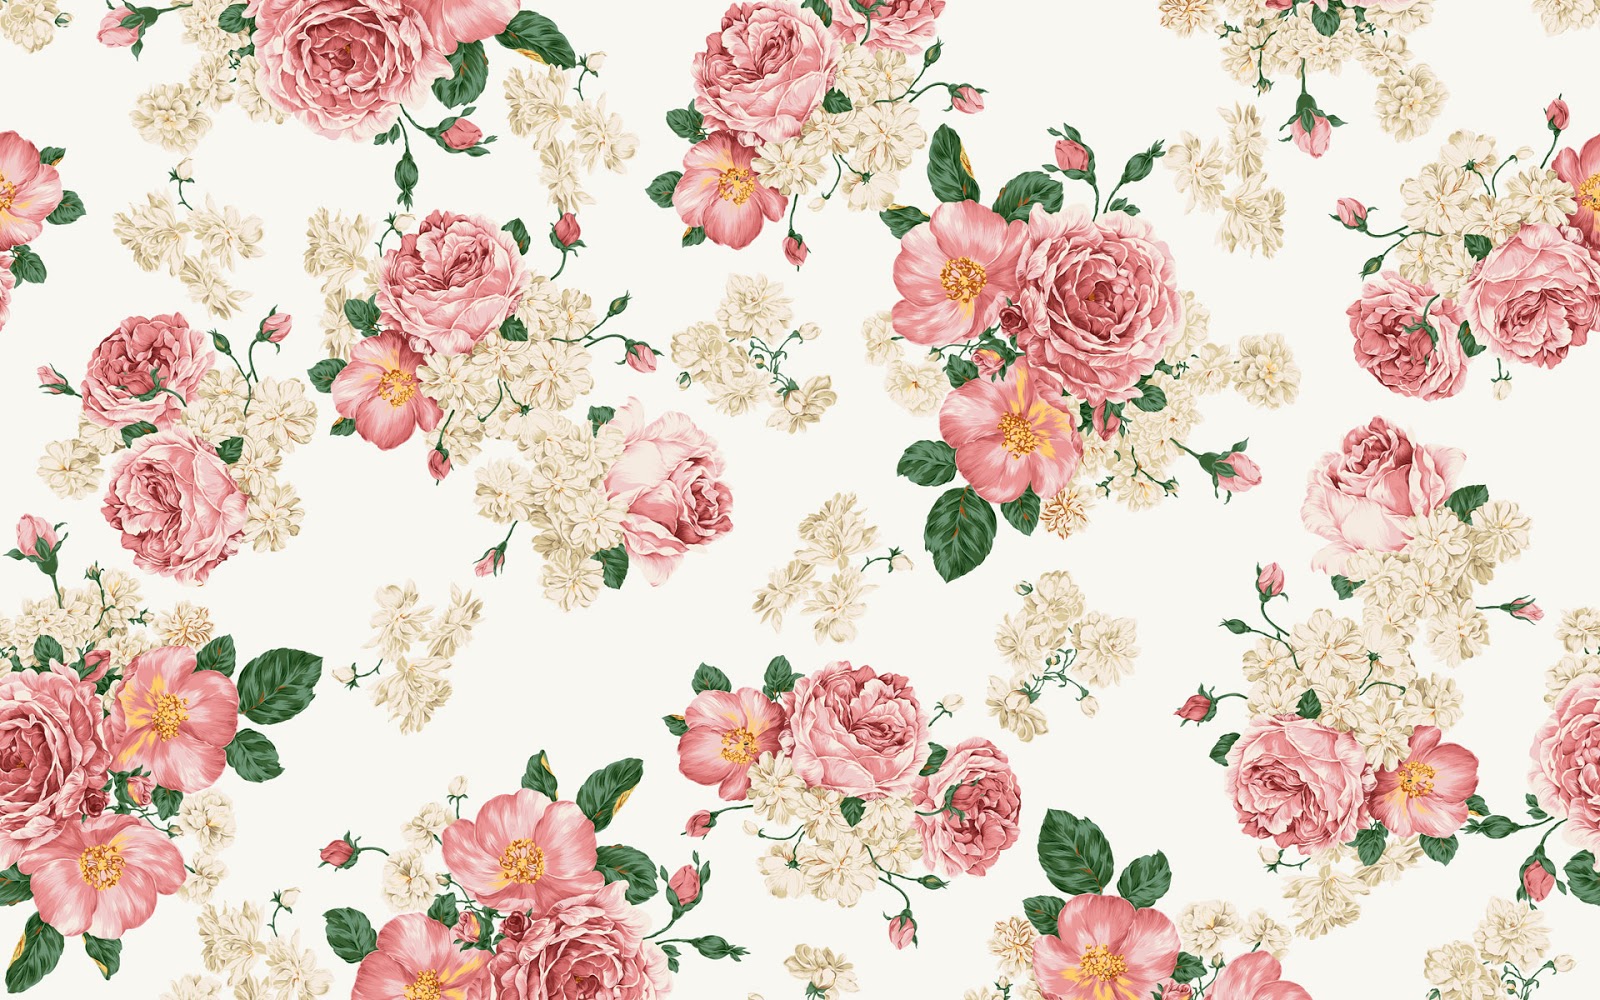 46+] Vintage Flower Wallpaper - WallpaperSafari